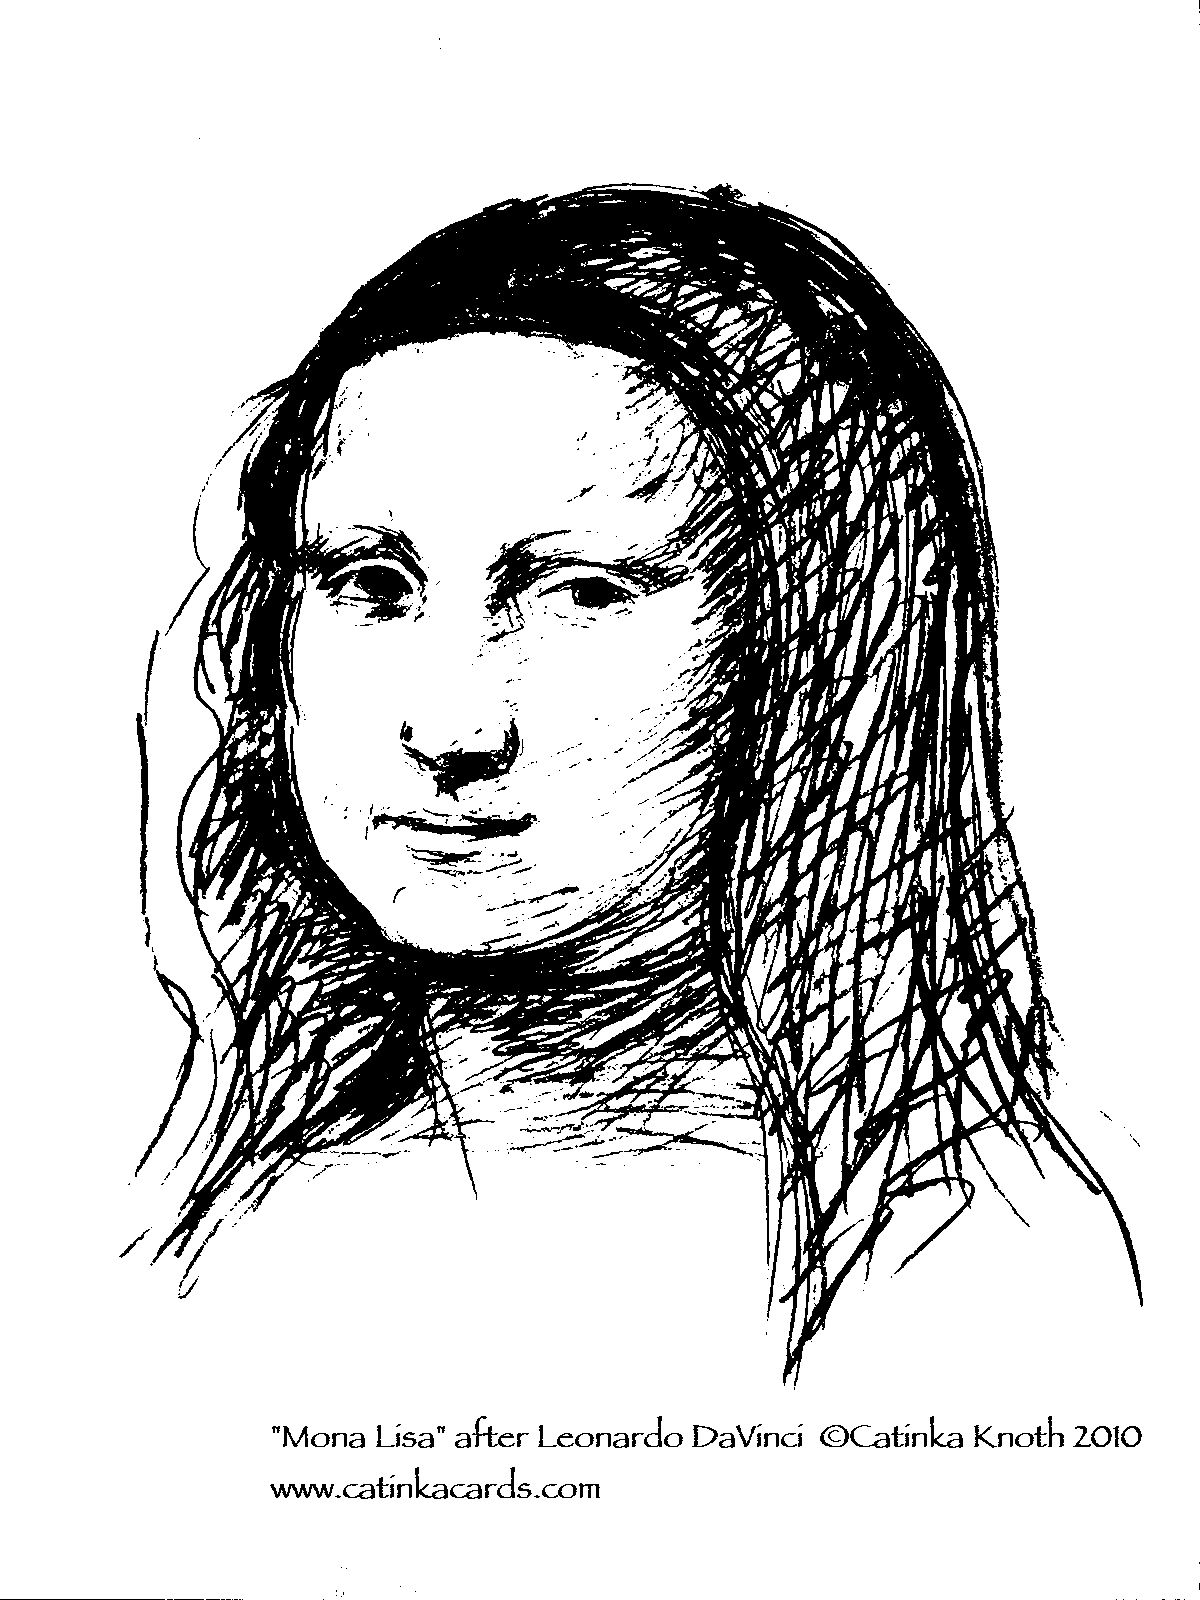 Mona Lisa coloring page after Leonardo Da Vinci by Catinka Knoth